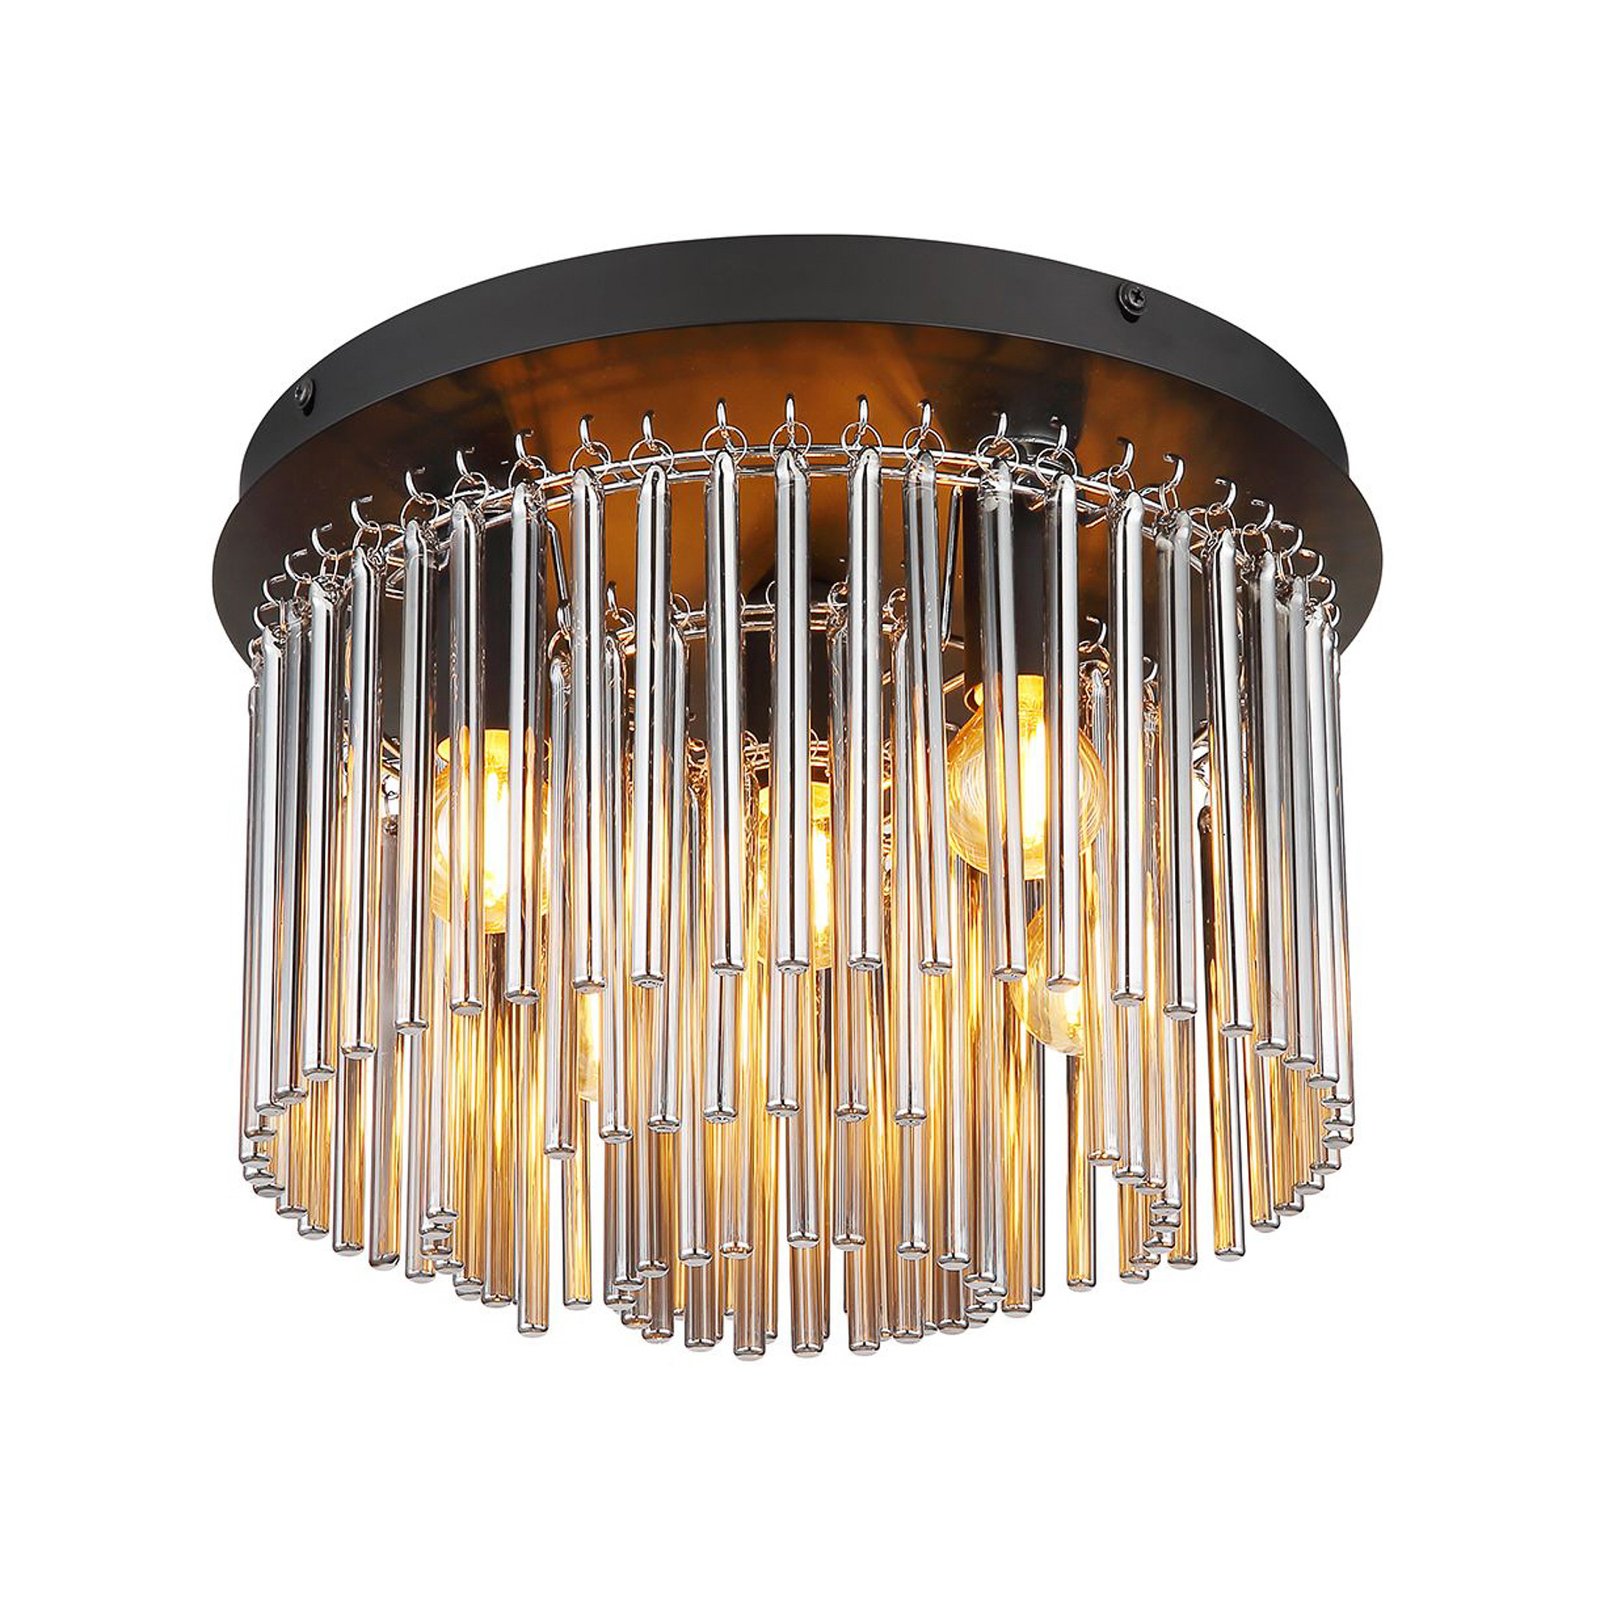 Gorley ceiling light with glass pendant Ø 32 cm